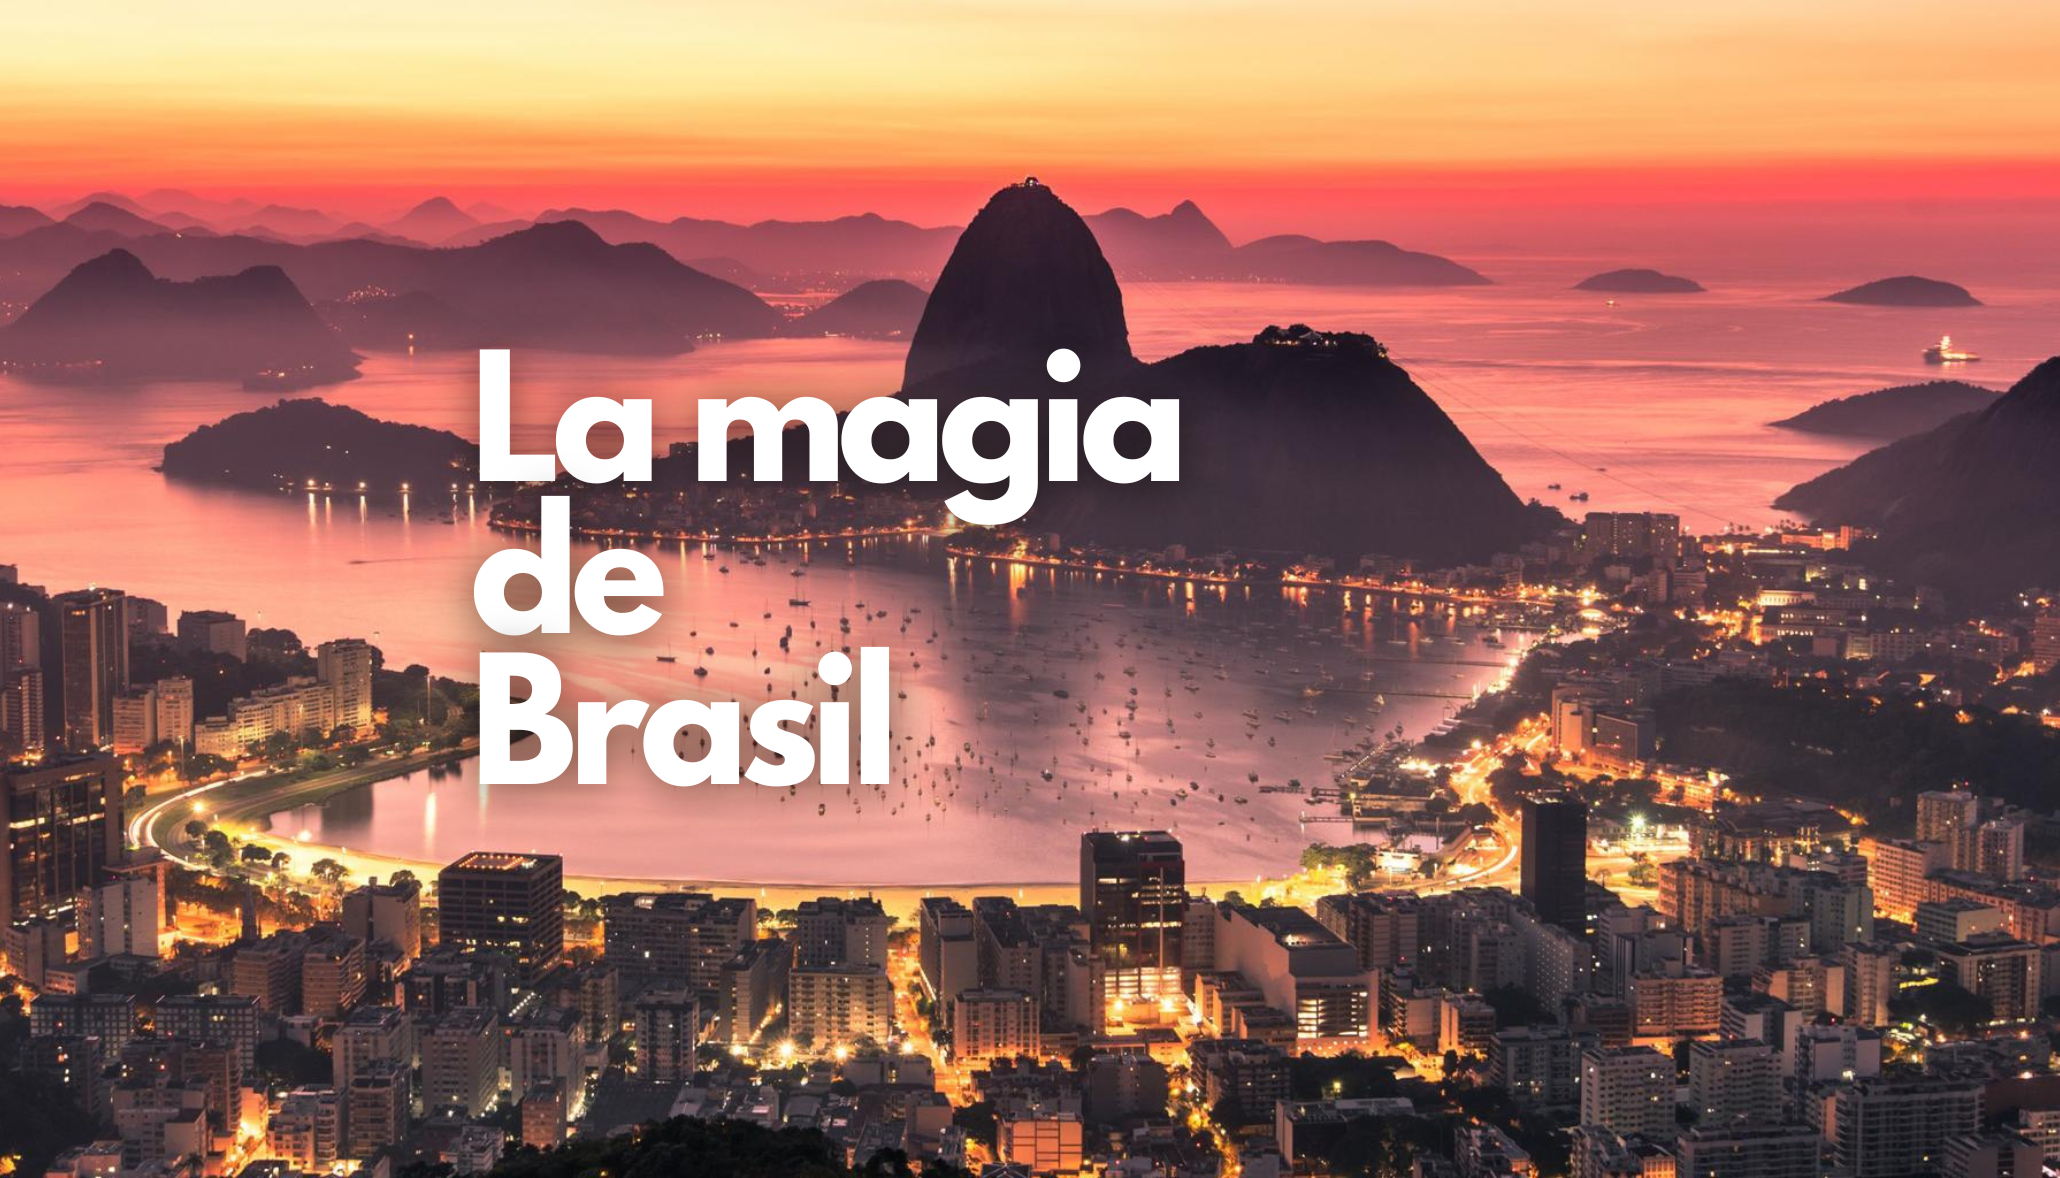 La magia de Brasil